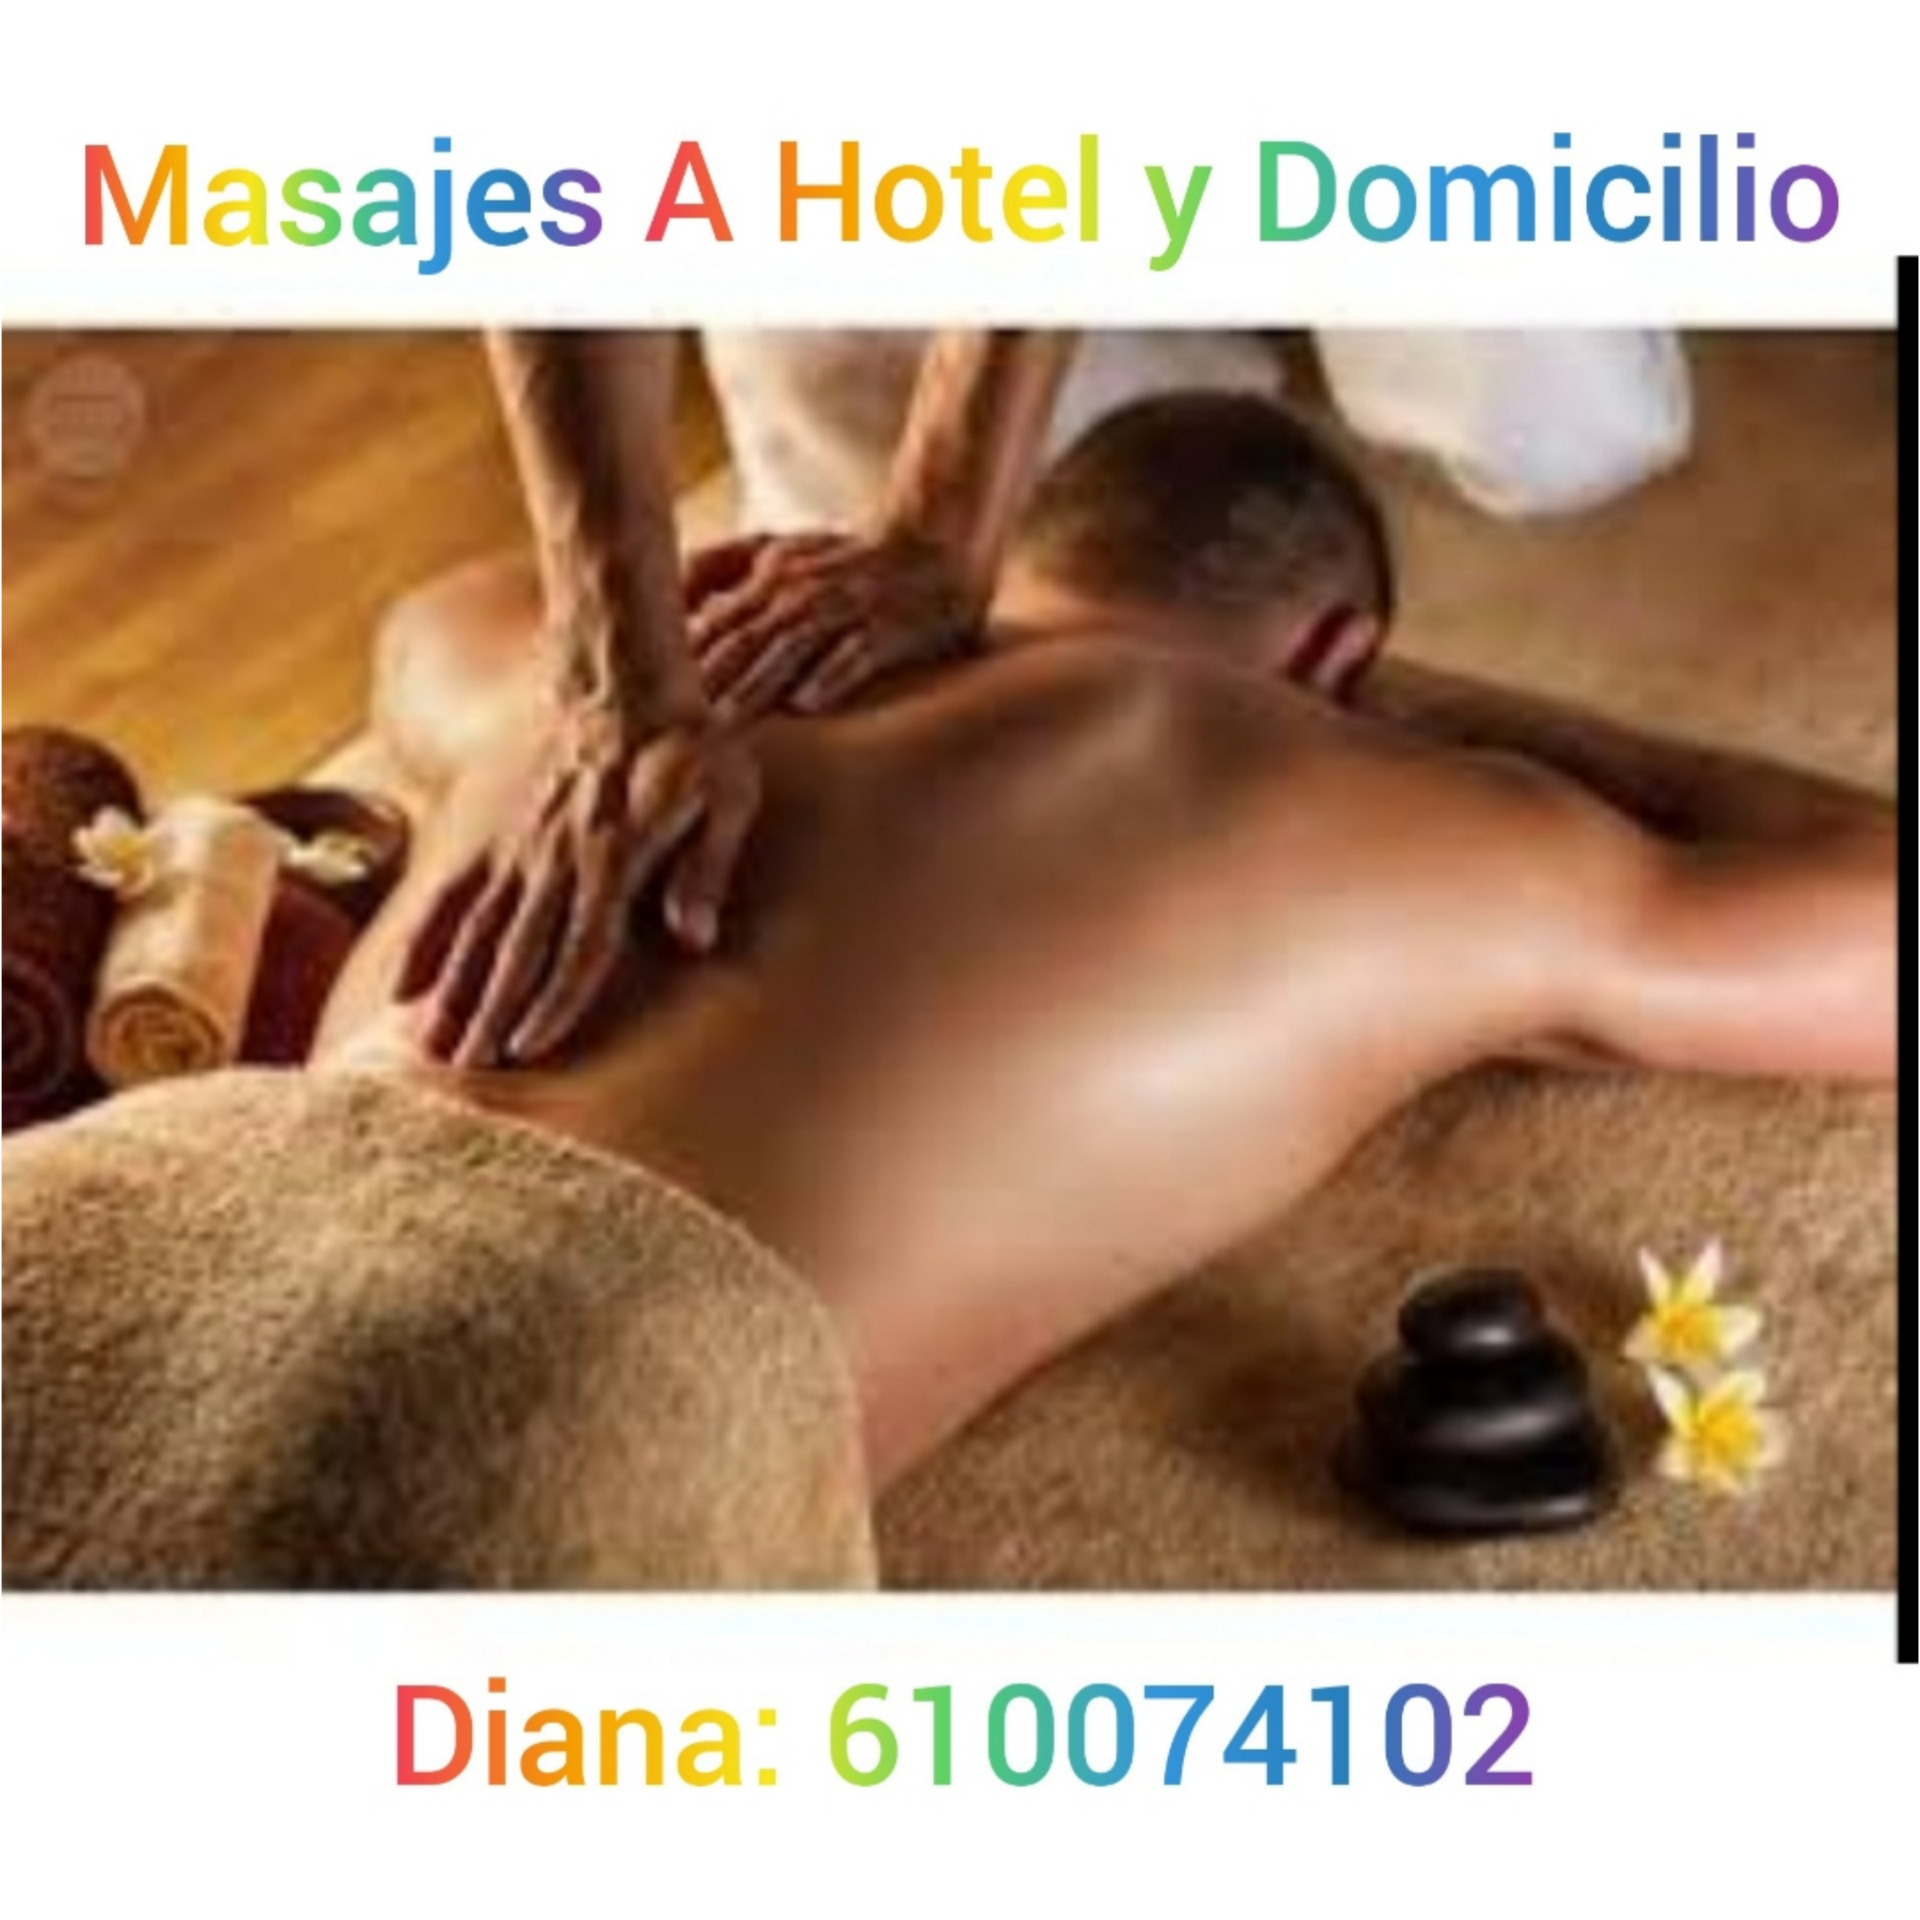 masajistas-terapeuticos madrid MASAJES Domicilio hotel madrid